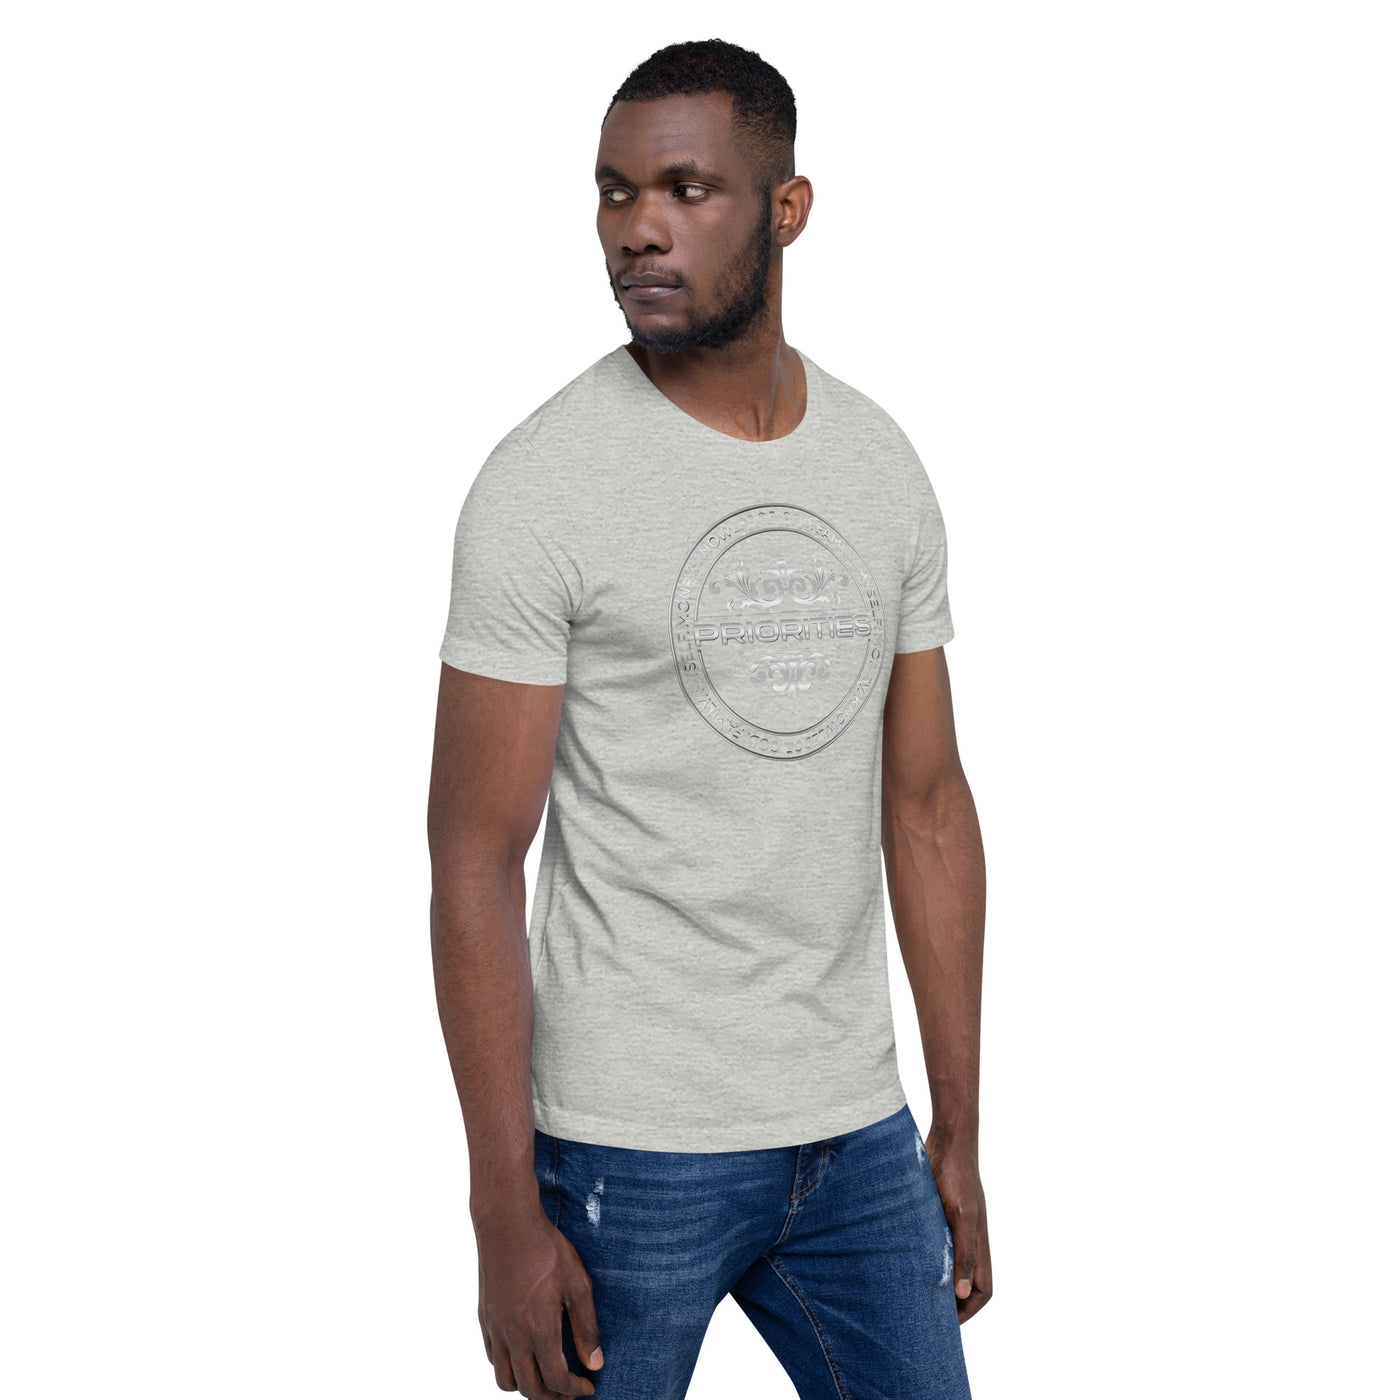 Short-Sleeve Unisex T-Shirt / With all Platinum Priorities logo.